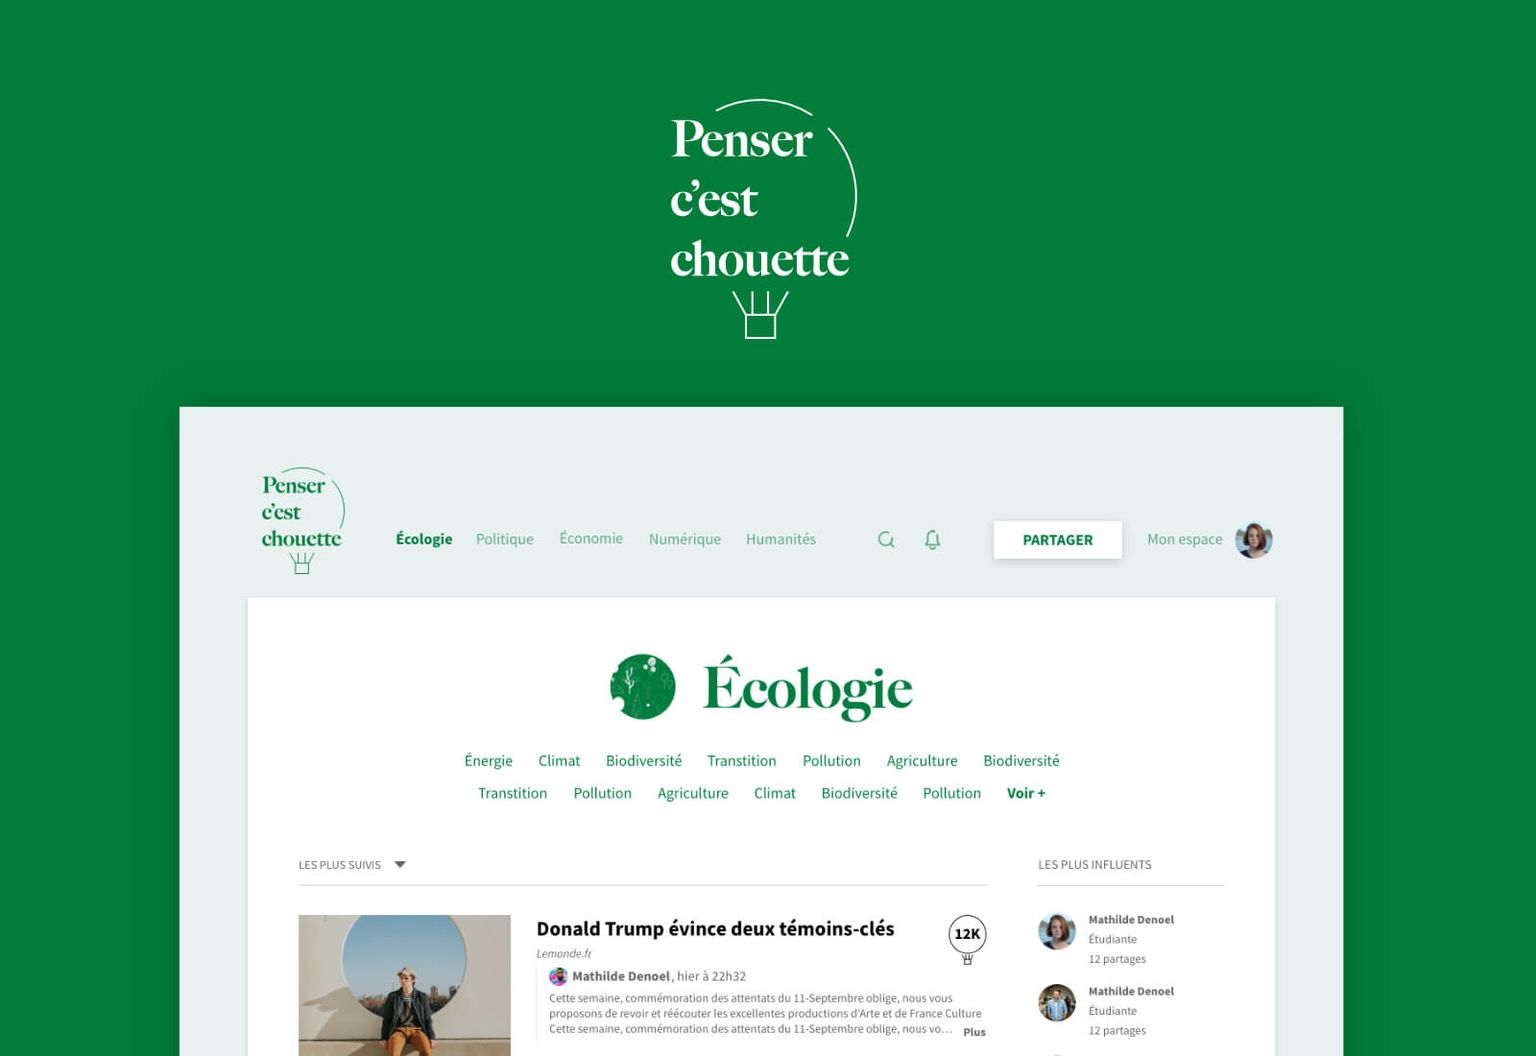 Ecology Page for Penser c'est Chouette